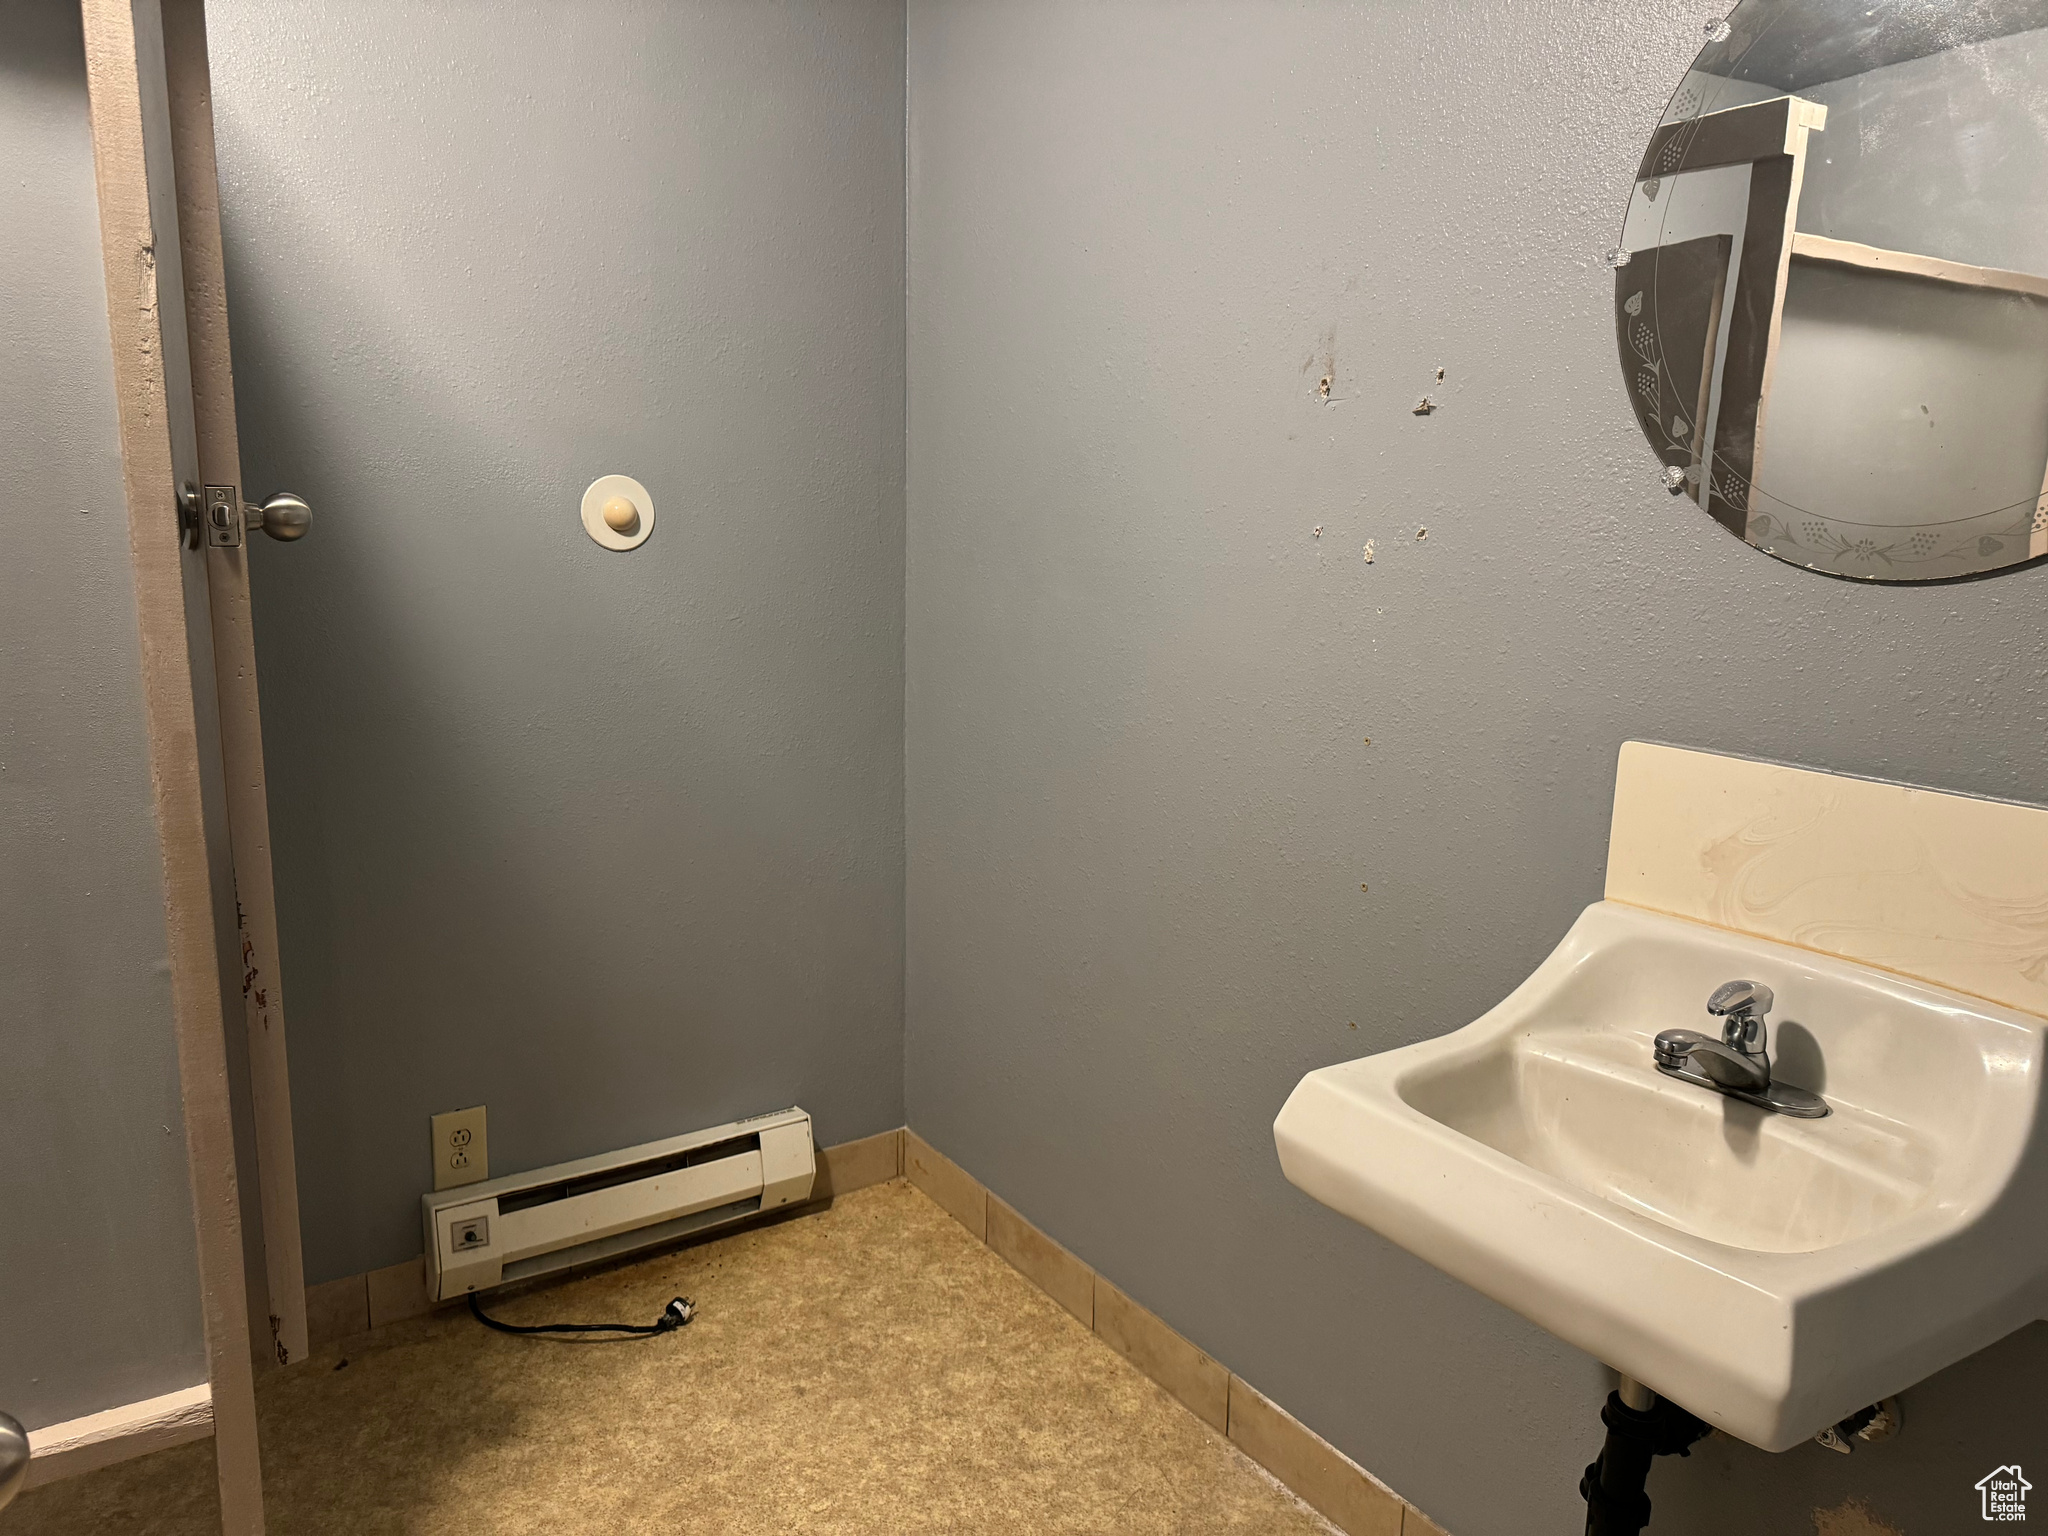 Bathroom featuring baseboard heating and sink